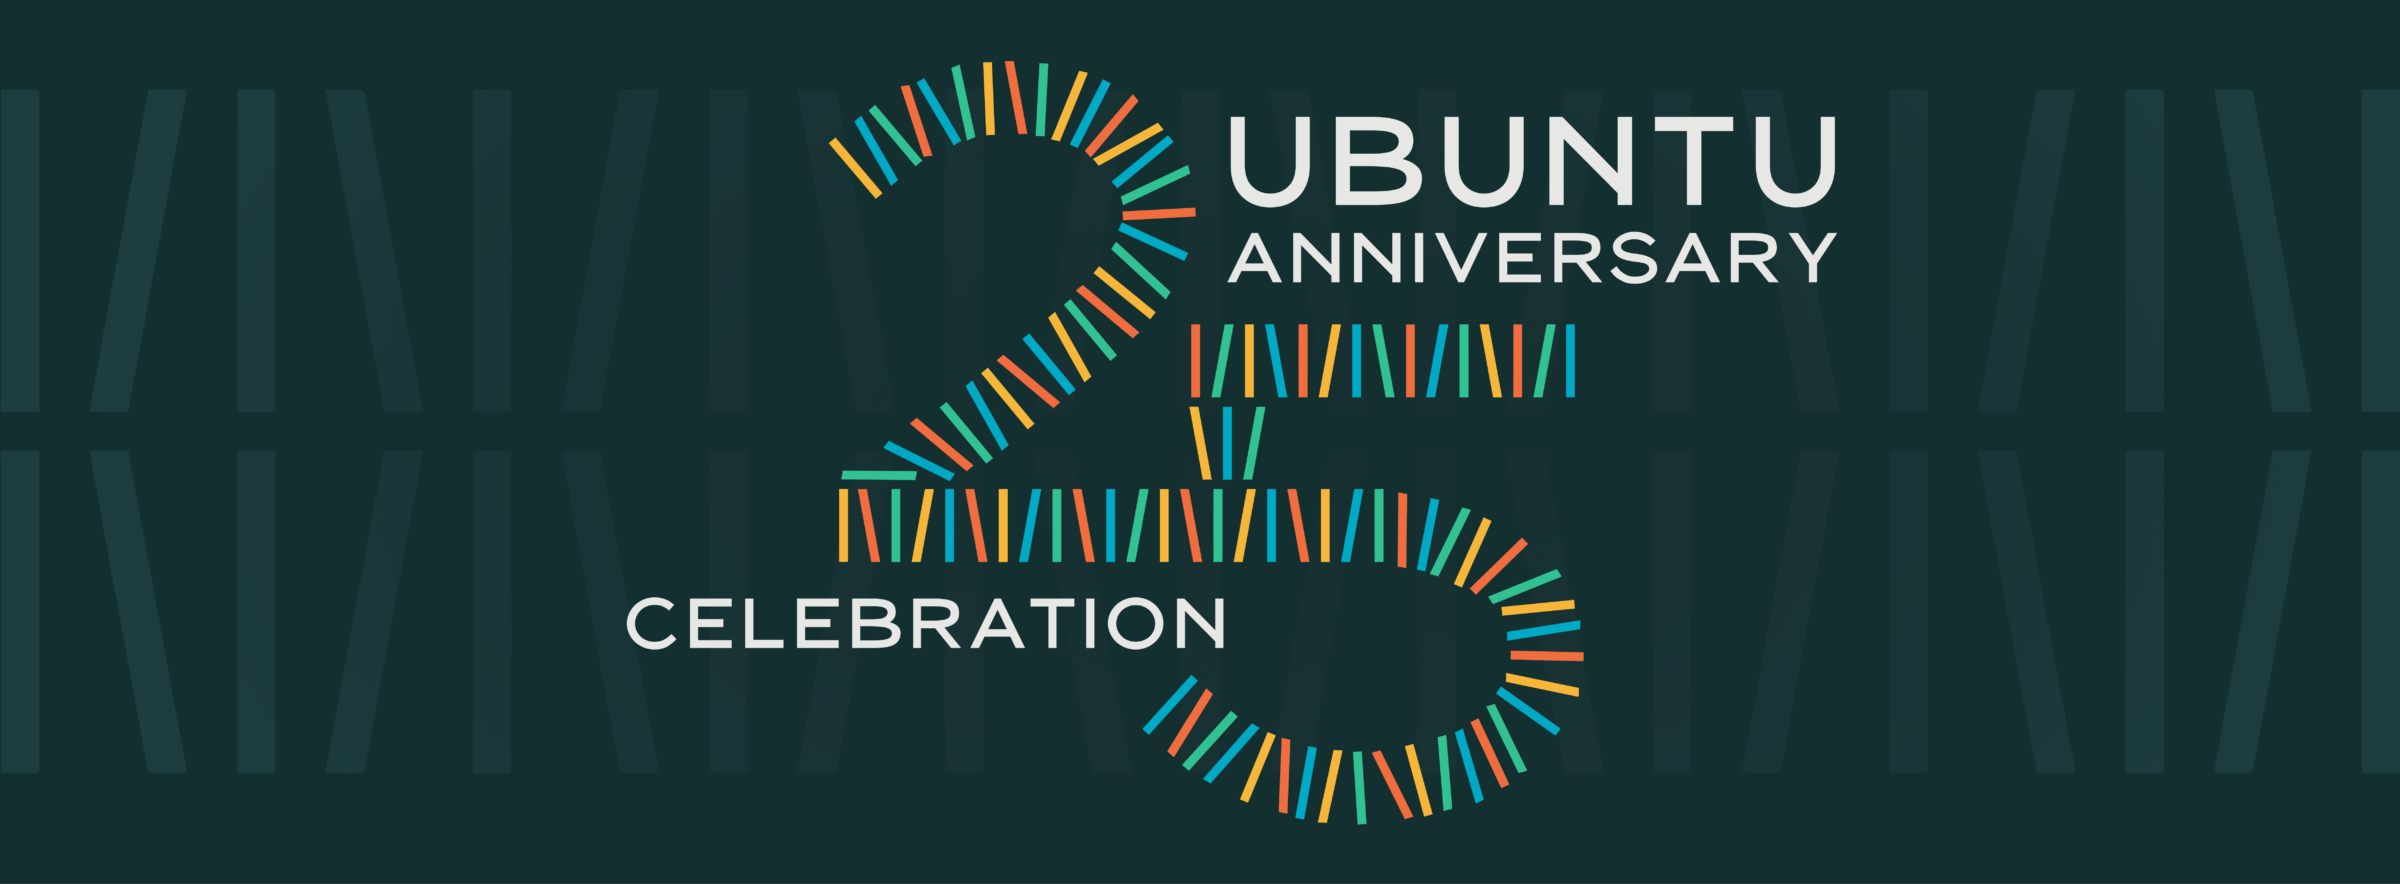 25 Ubuntu Anniversary Celebration Website Header